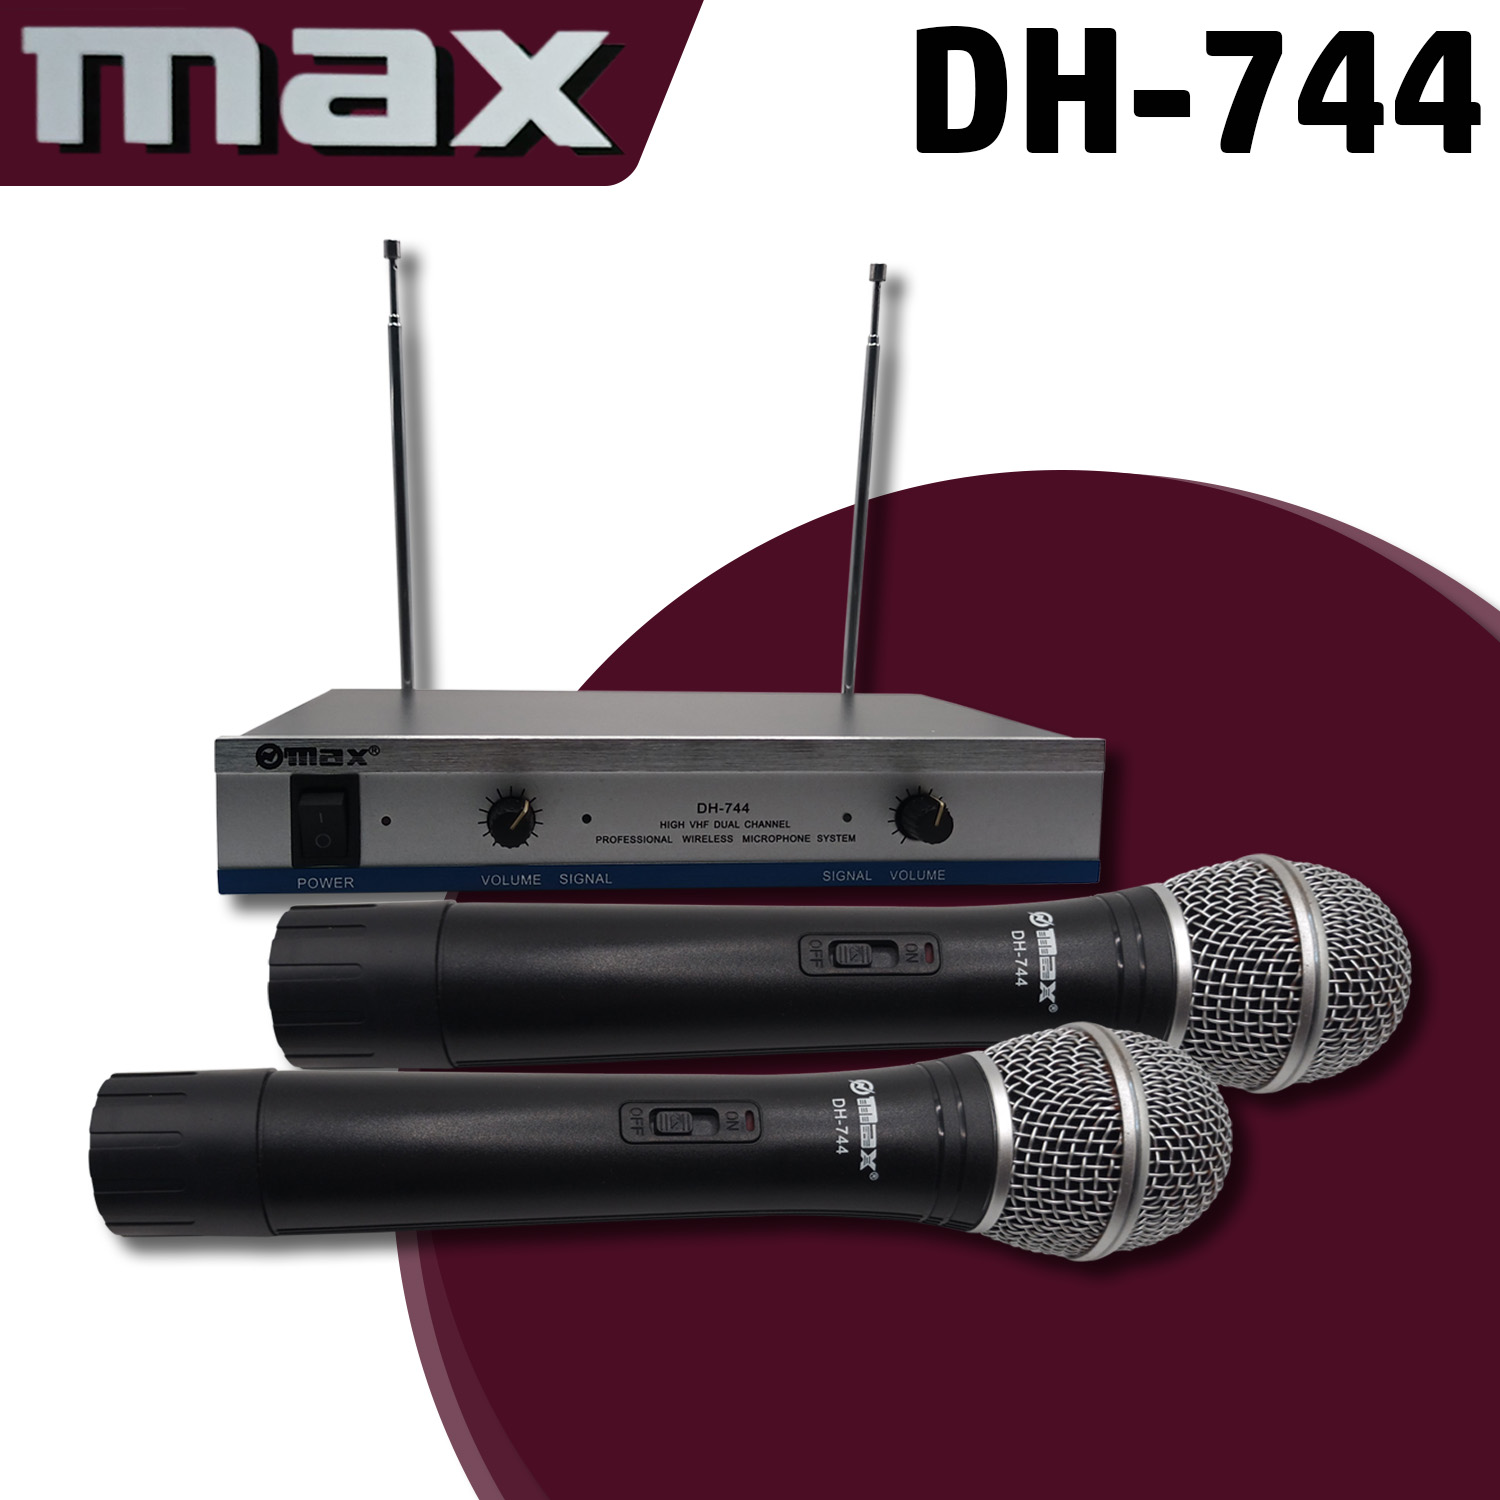 MICROPHONE Sans Fil MAX PROFESSIONAL DH-744